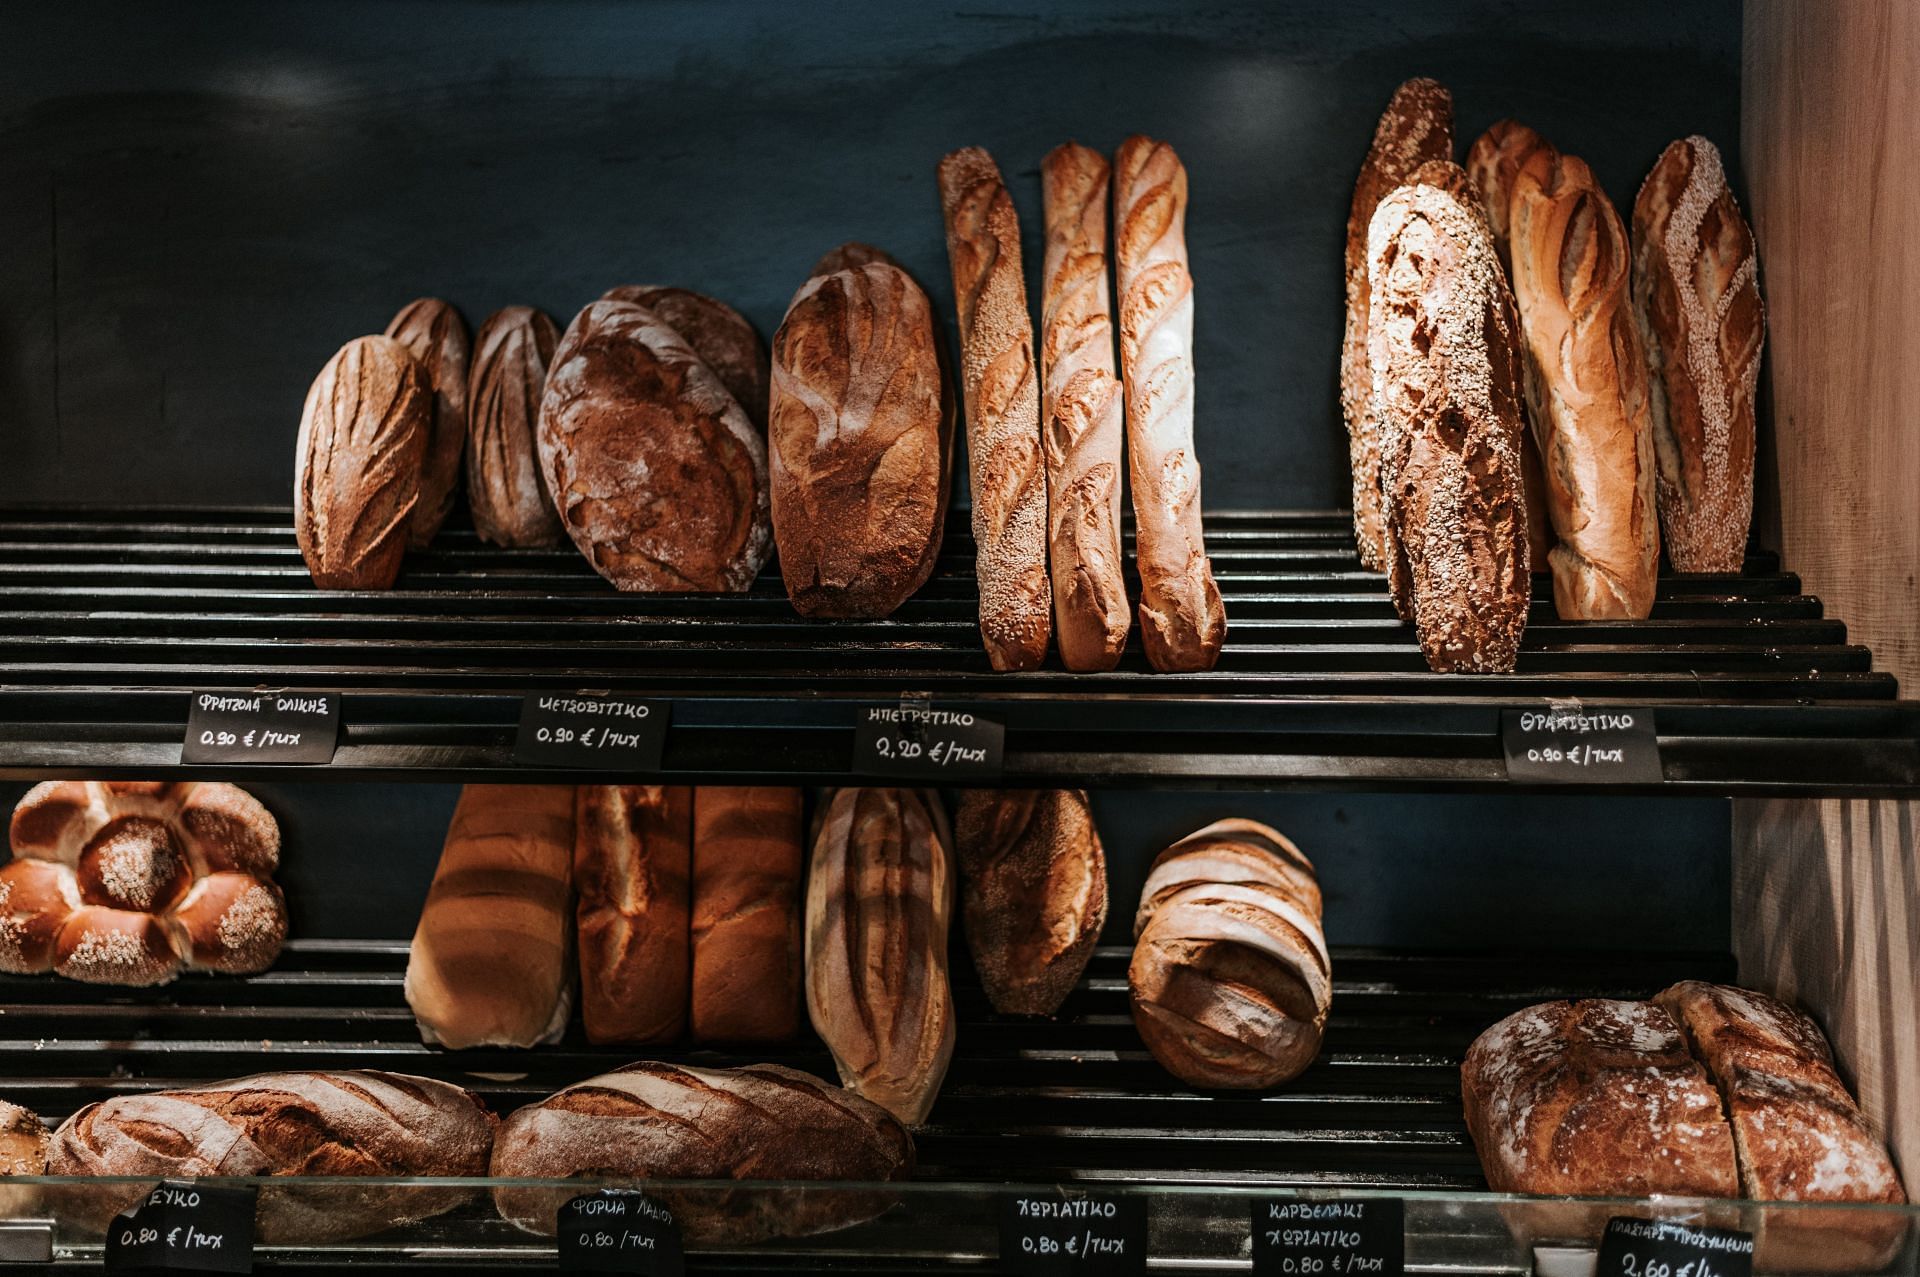 Ezekiel bread is a type of organic, sprouted whole wheat bread. (Image via Unsplash / Angelo Pantazis)